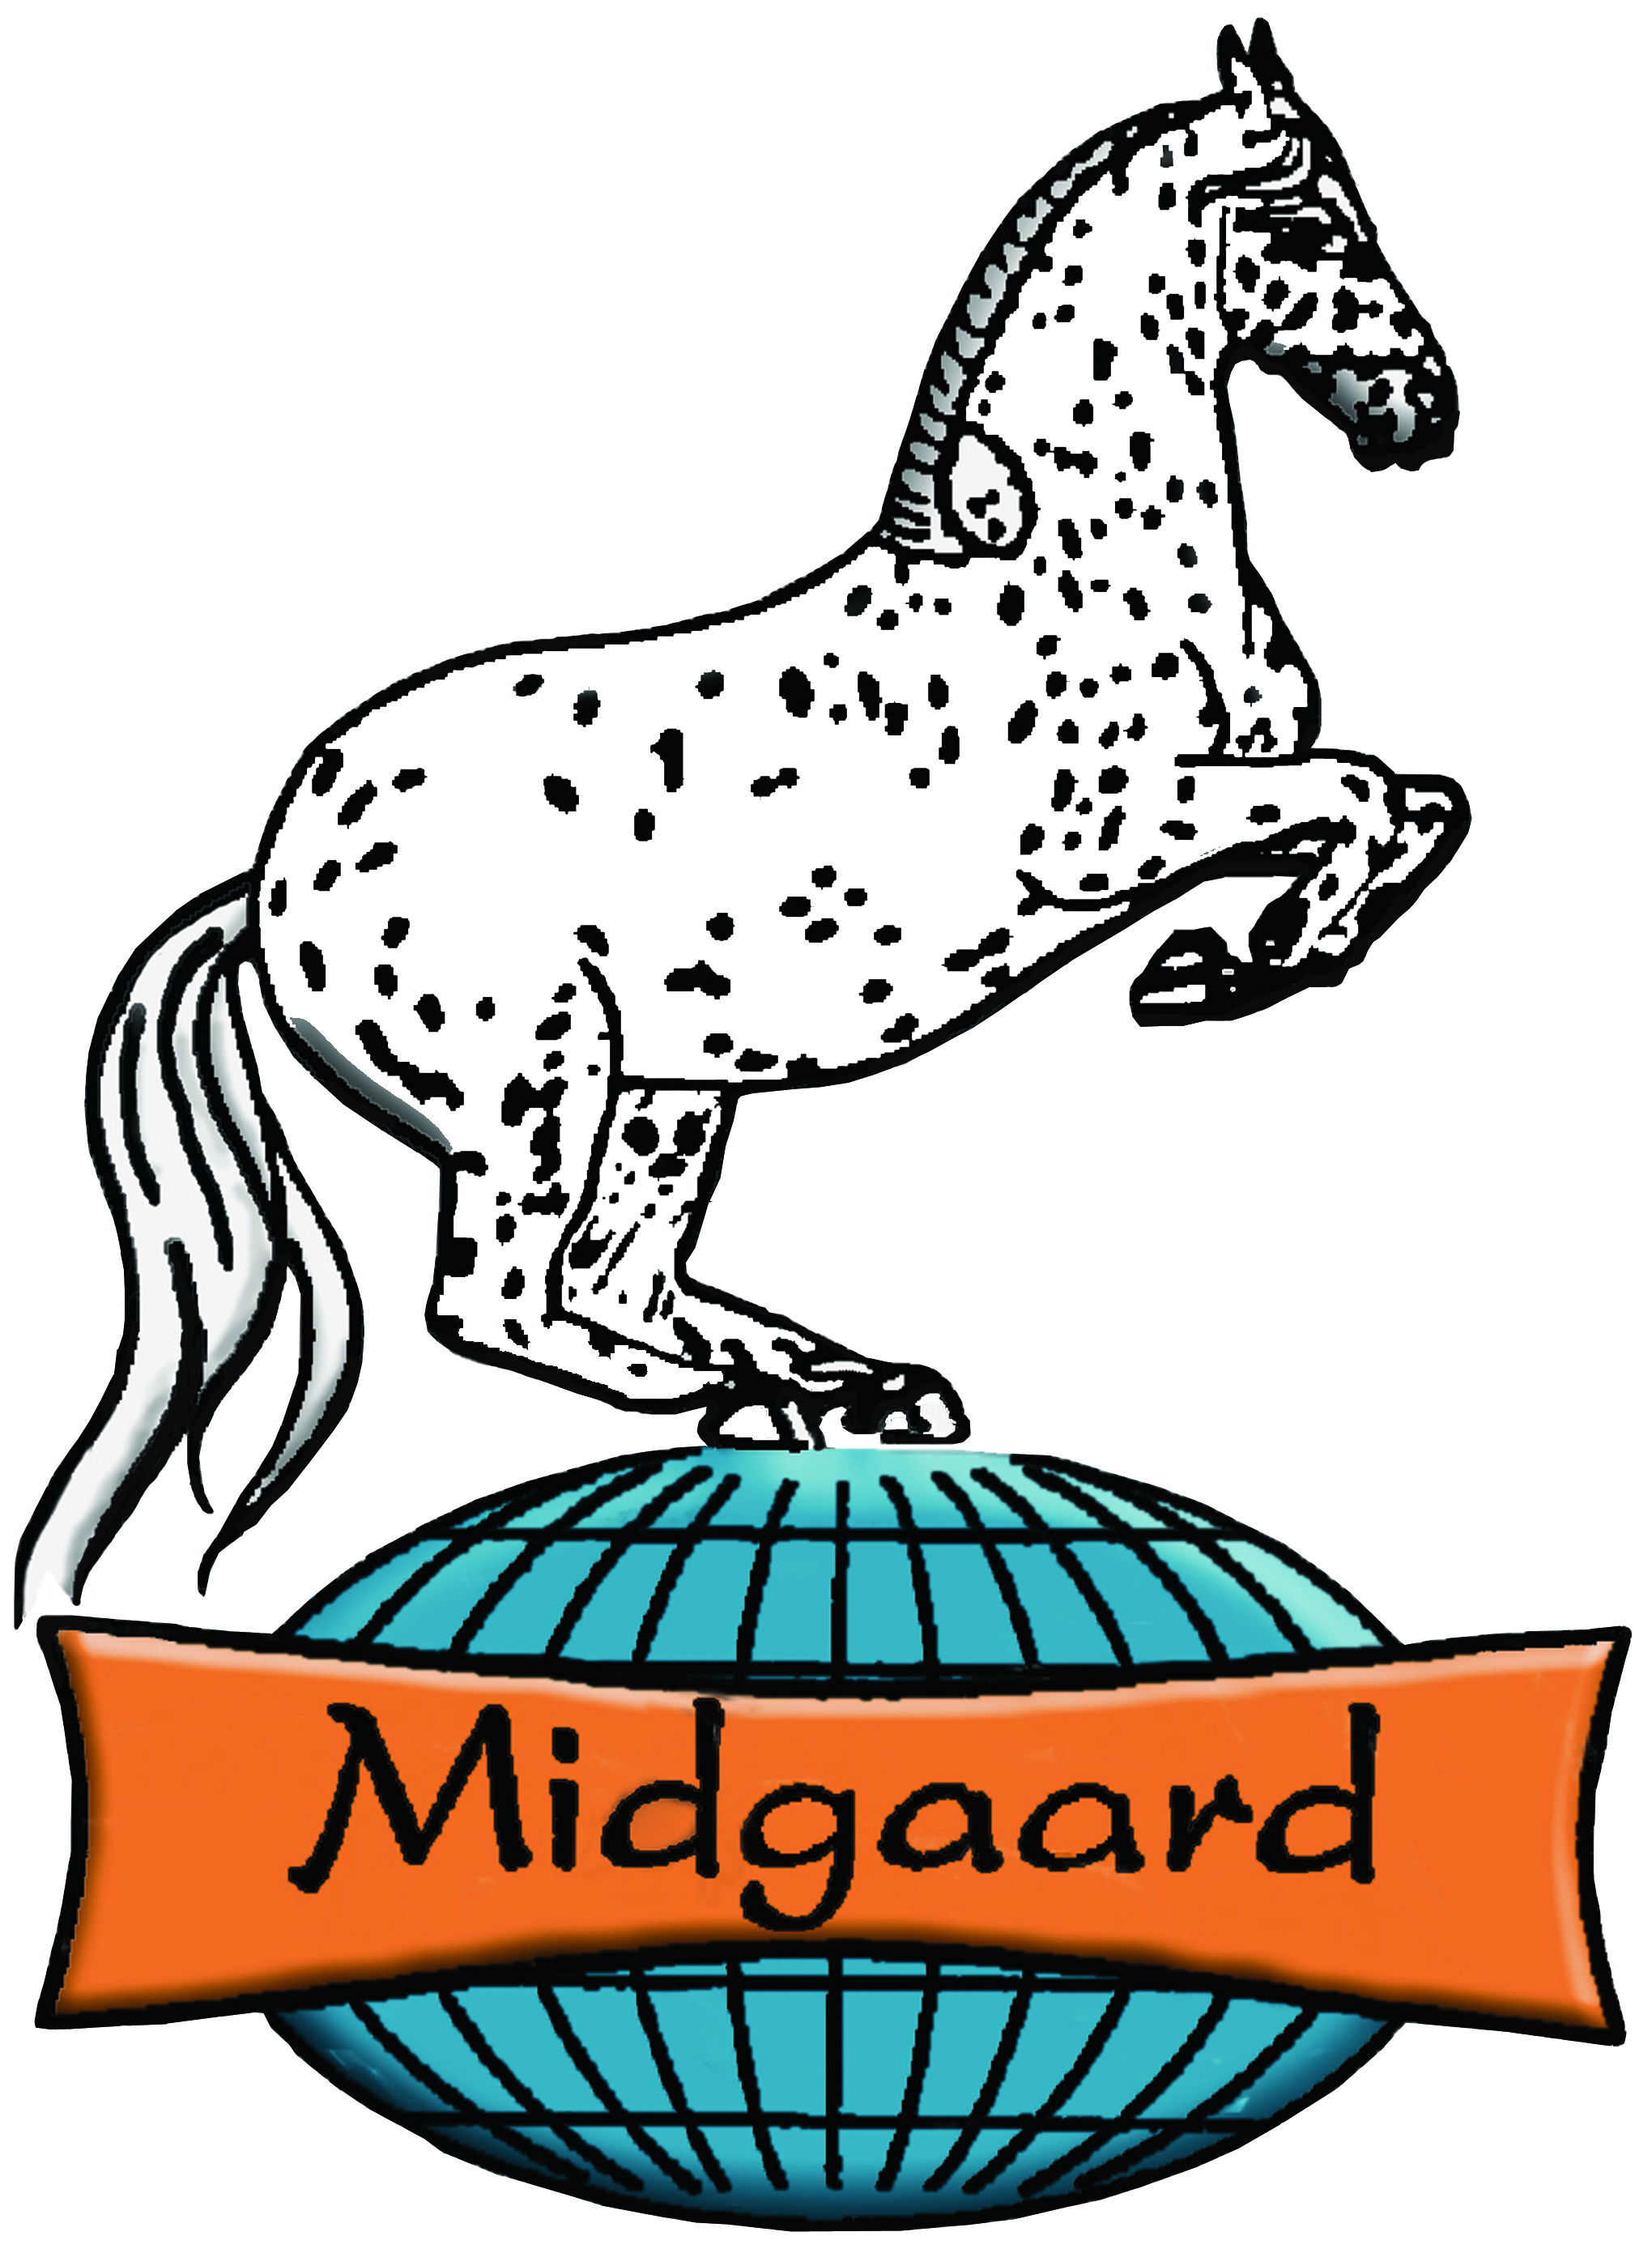 Logo Midgaard